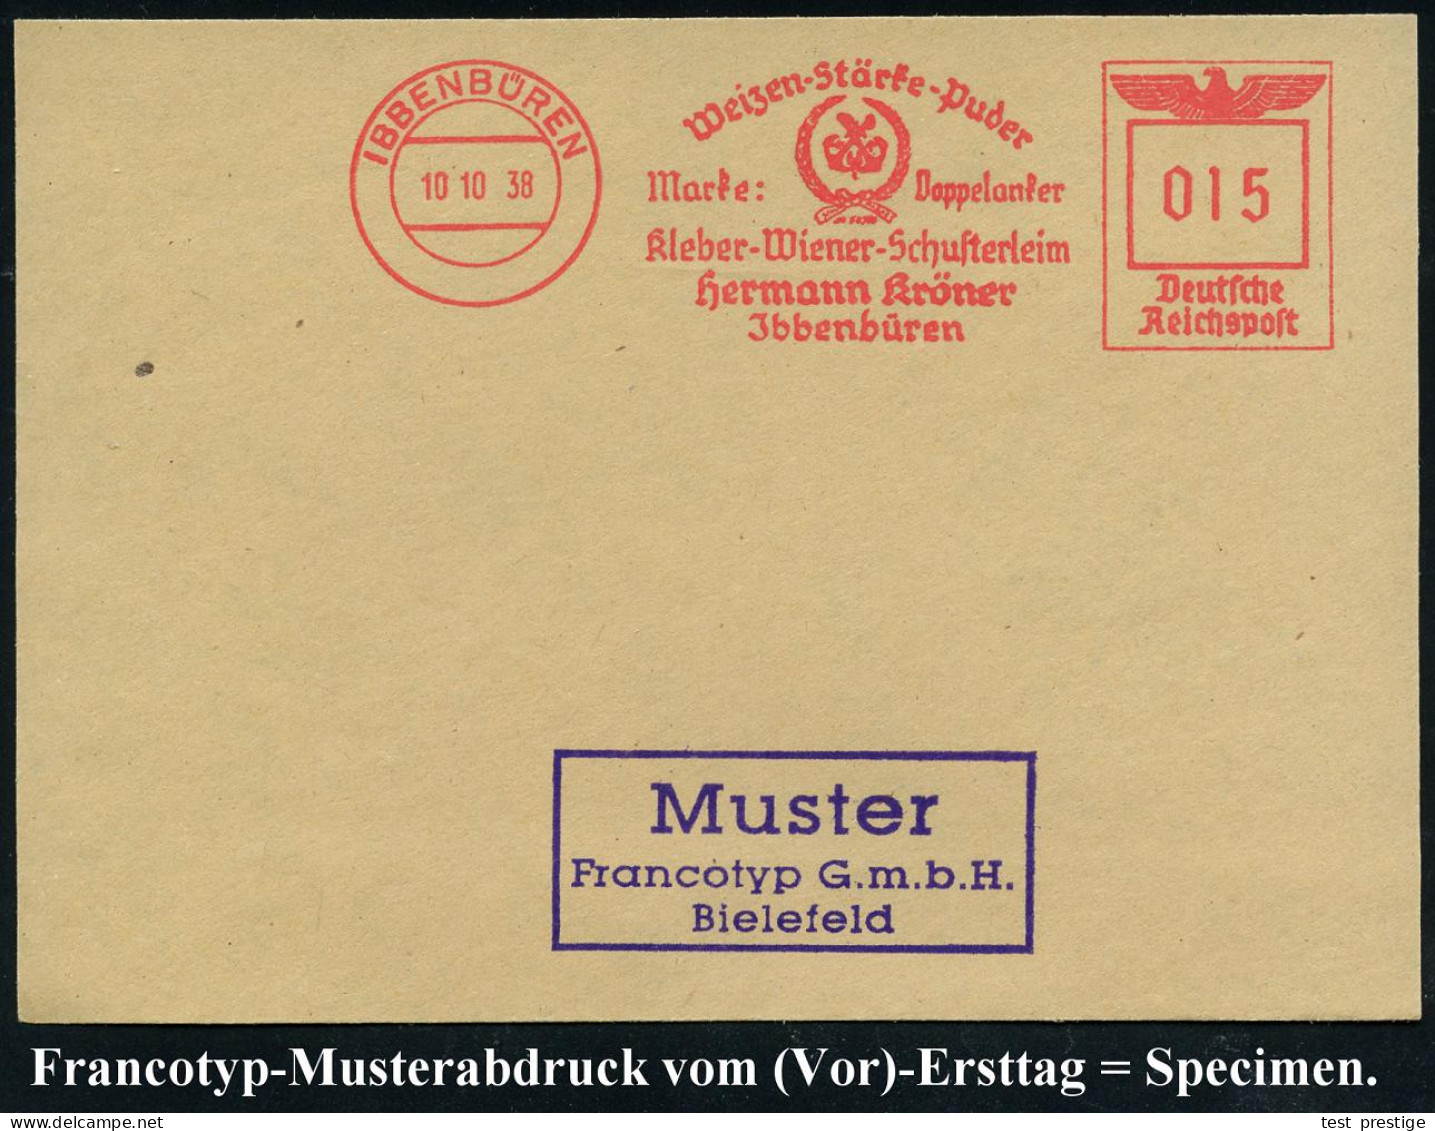 IBBENBÜREN/ Weizen-Stärke-Puder/ Marke: Doppelanker/ Kleber-Wiener-Schusterleim/ Hermann Kröner 1938 (10.10.) AFS-Muster - Chemistry